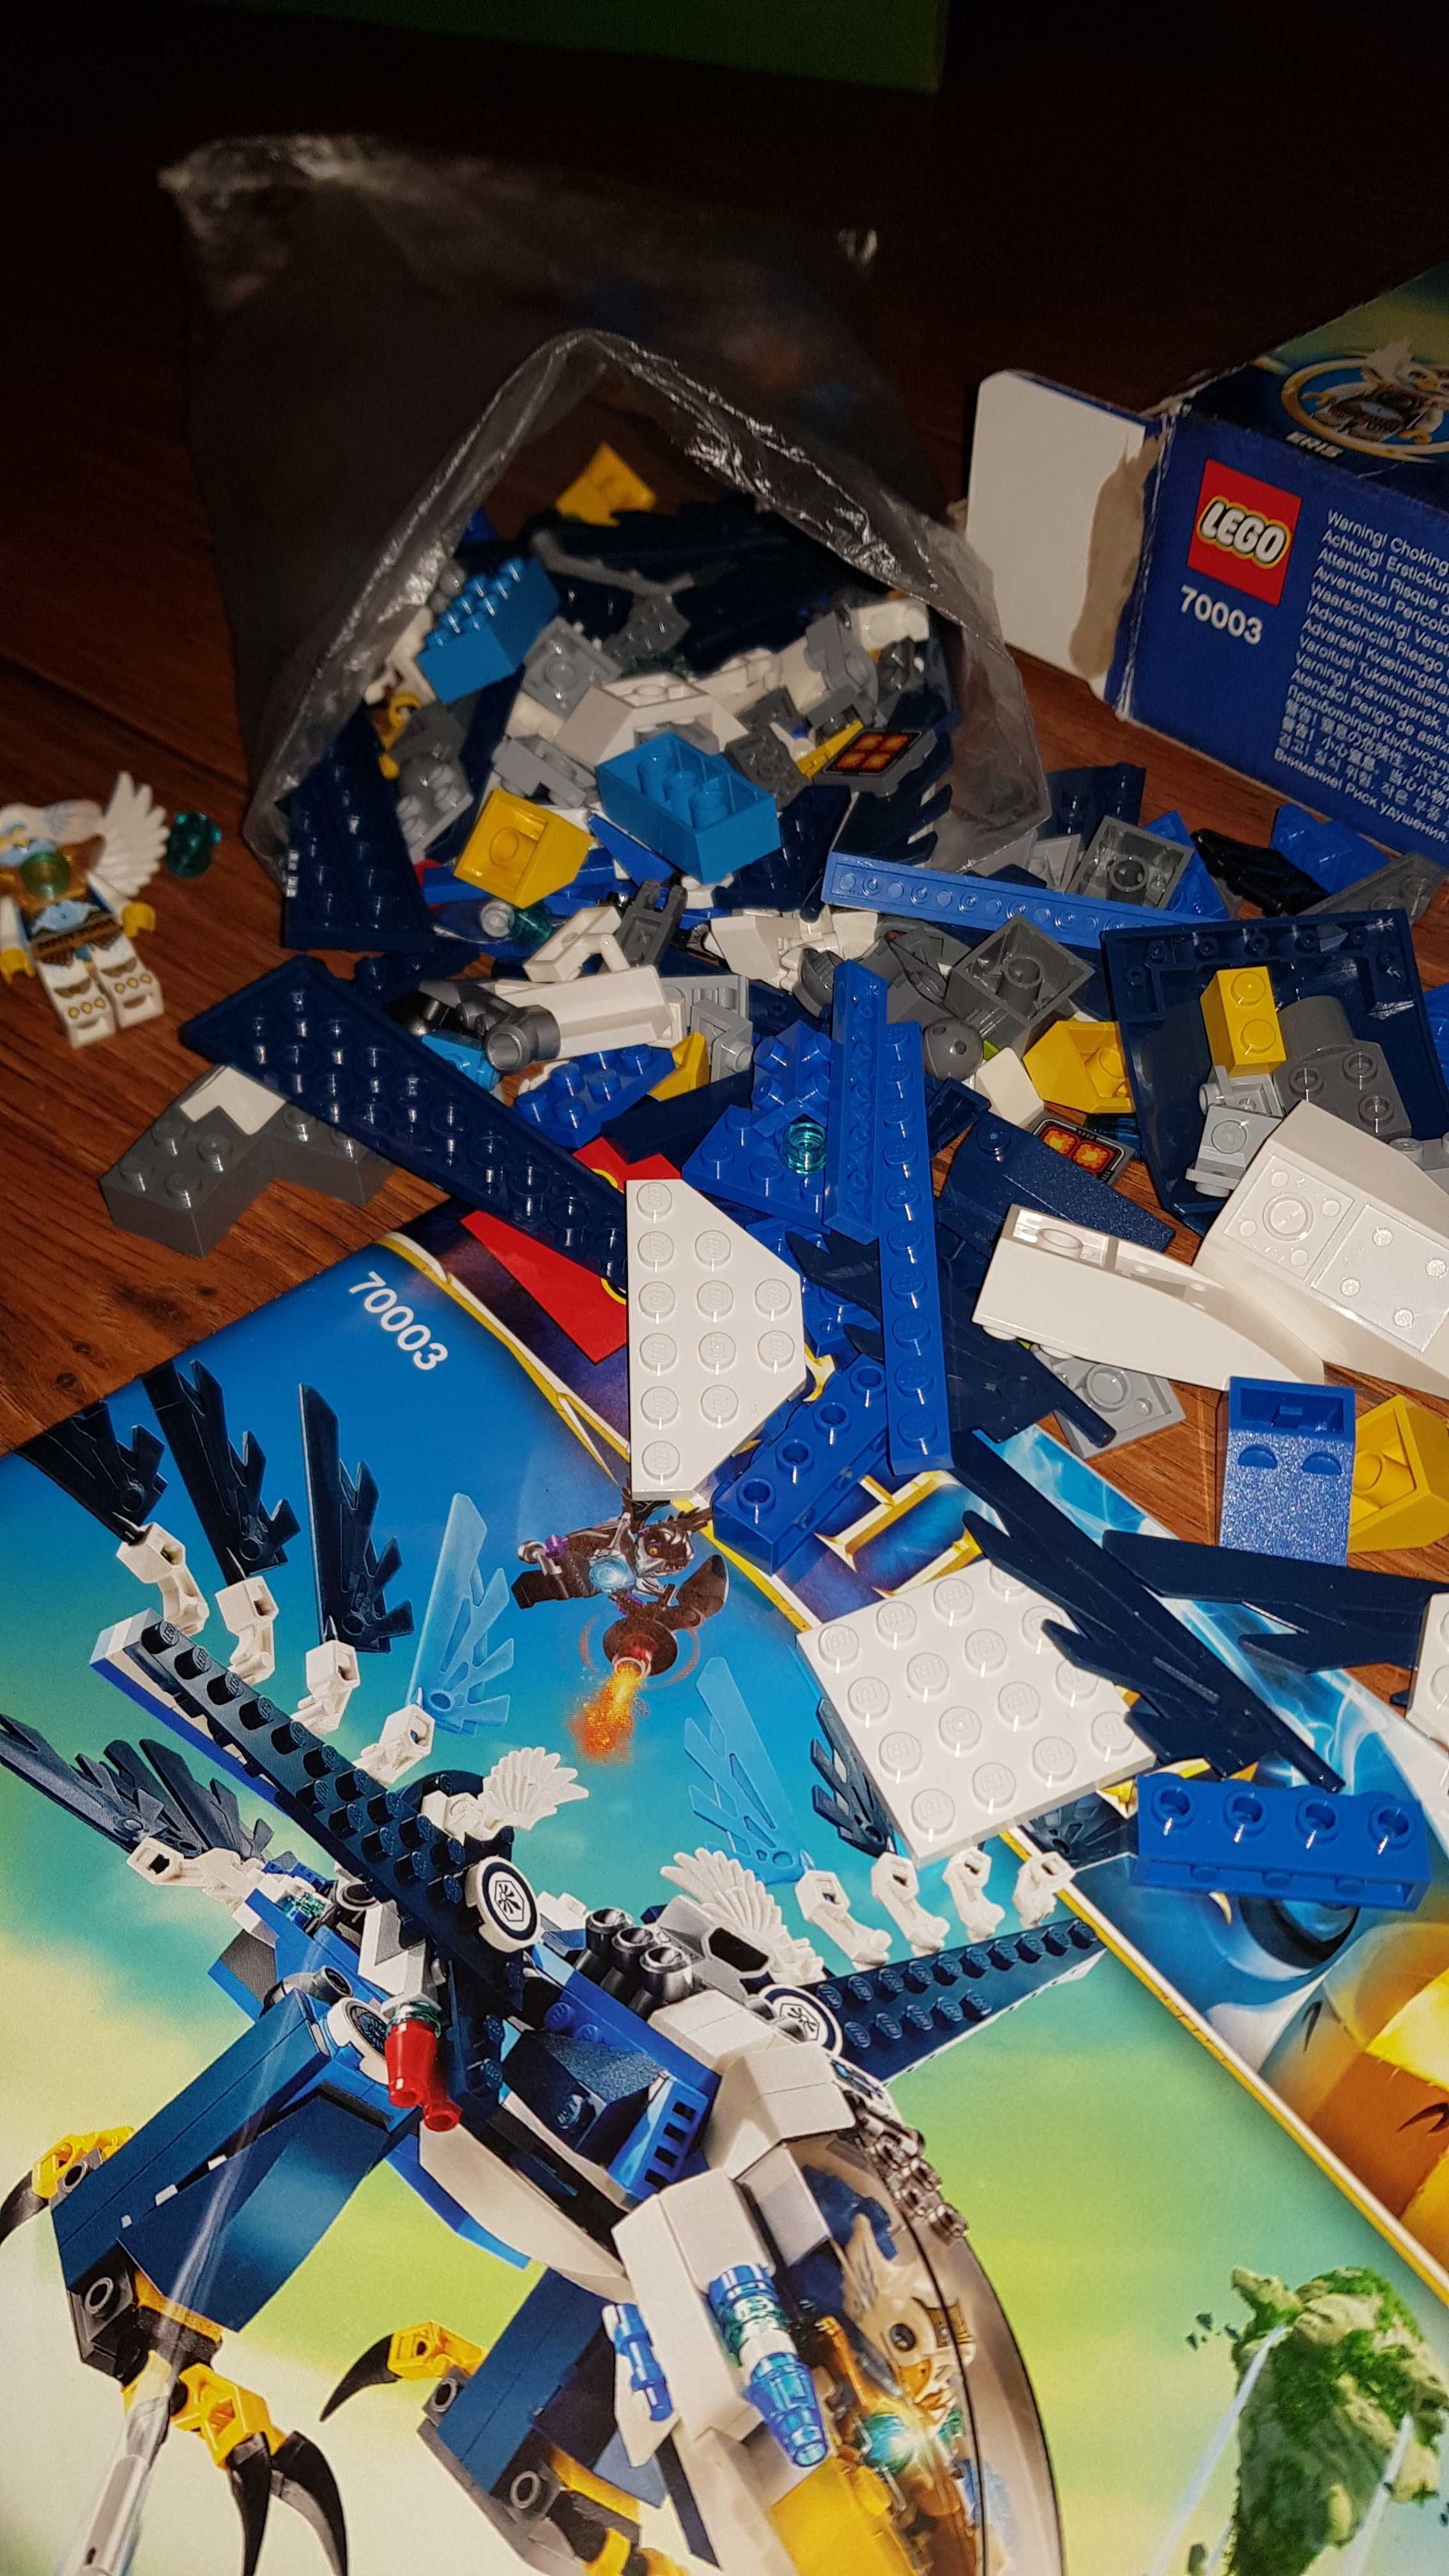 Lego Vultur Eris 70003 complet